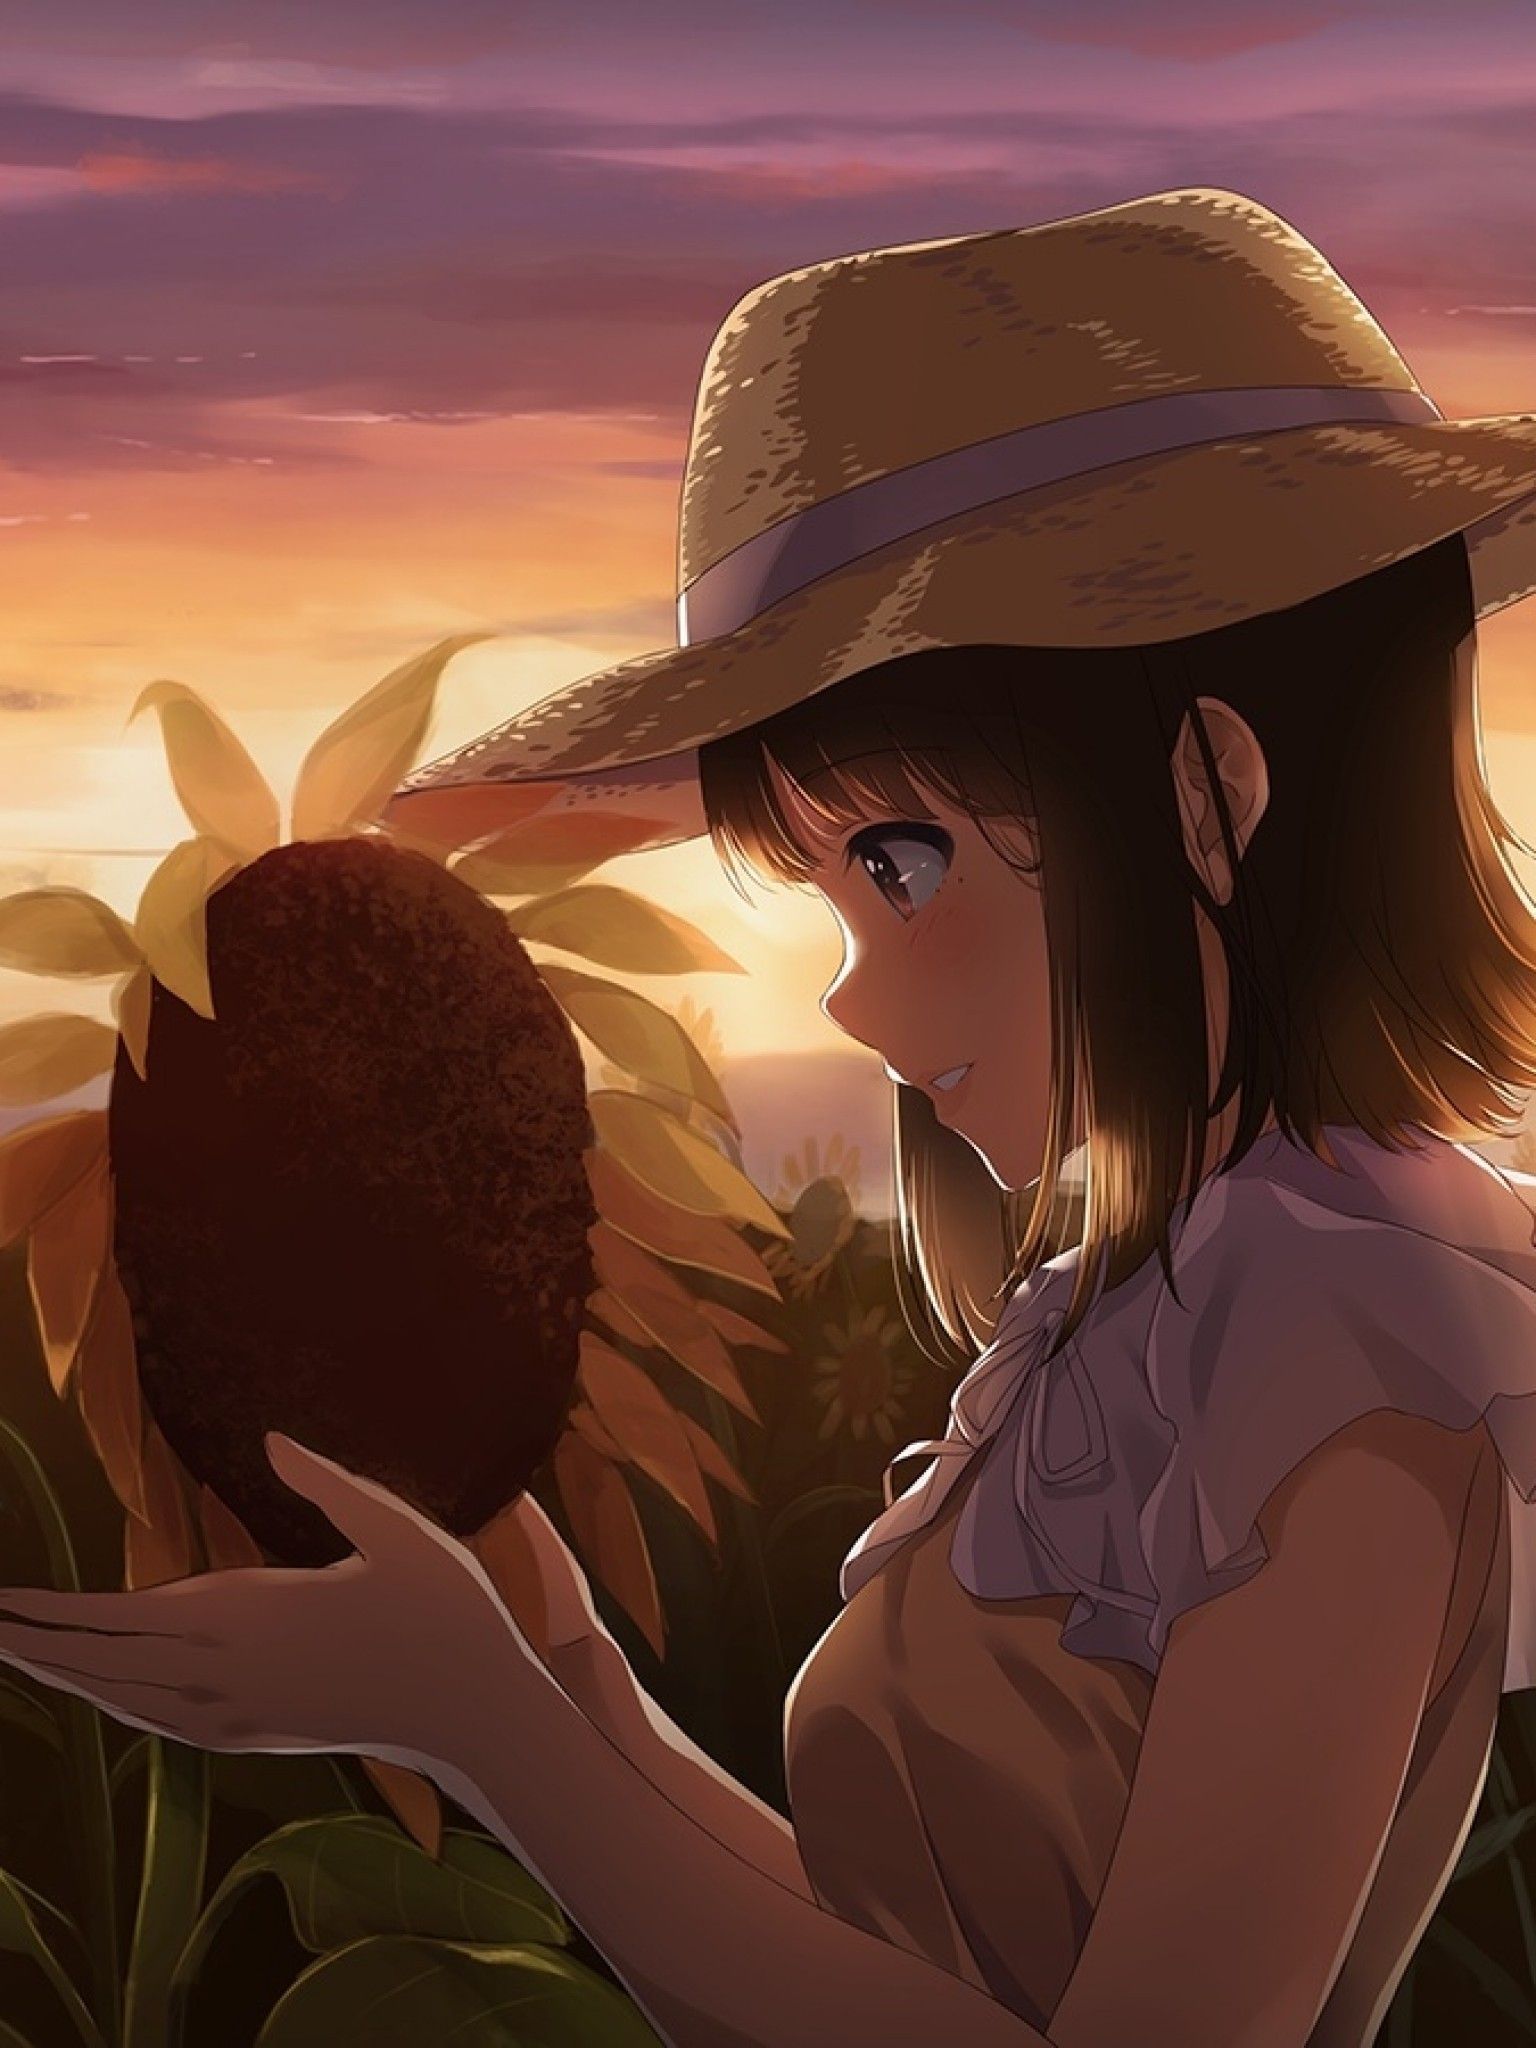 Download 1536x2048 Sunflower, Anime Girl, Sunset, Profile View, Straw Hat Wallpaper for Apple iPad Mini, Apple IPad 4